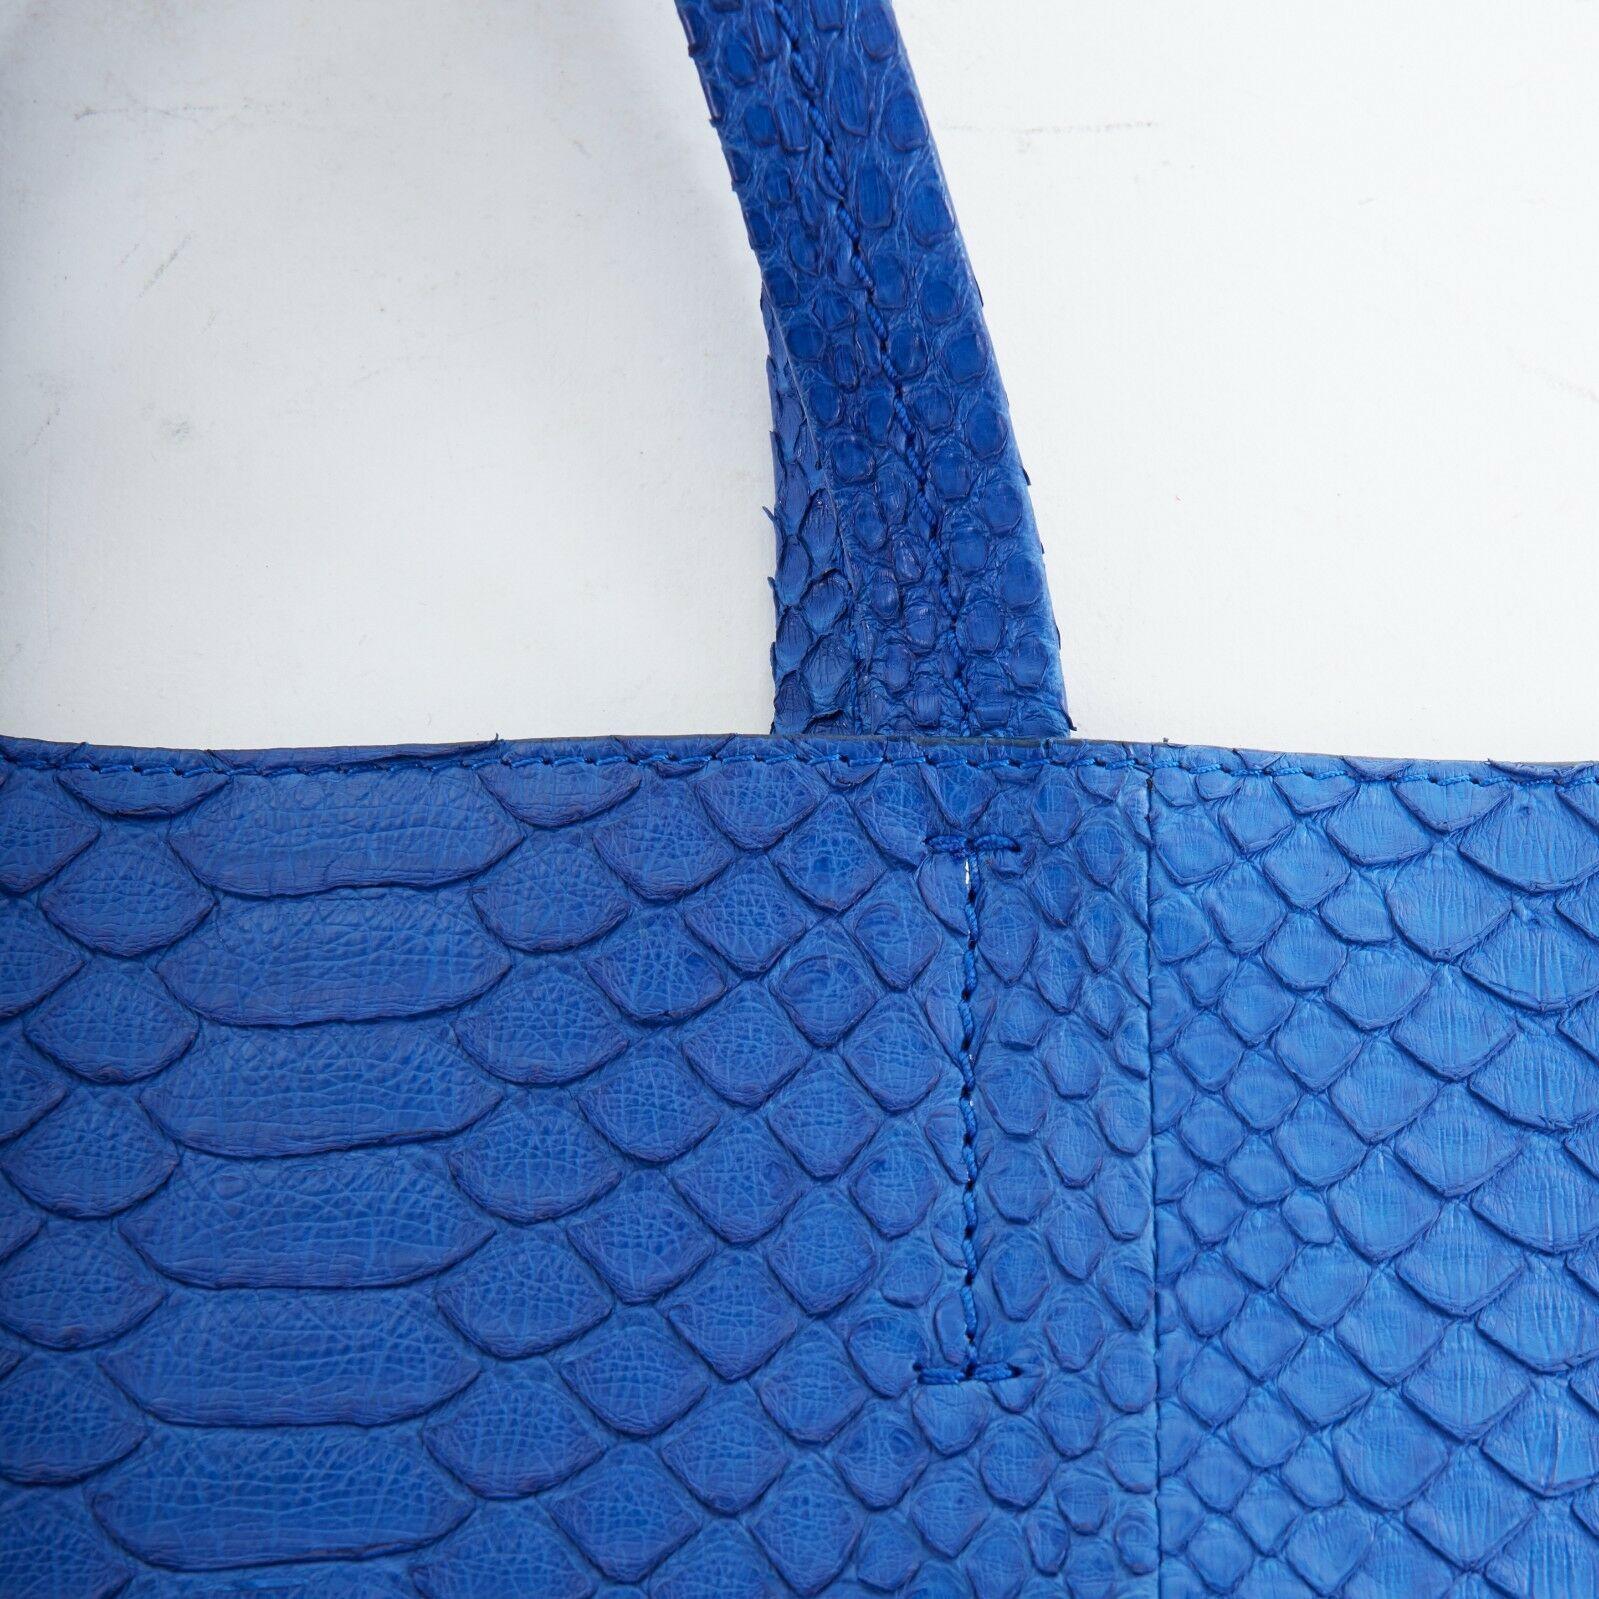 CELINE PHOEBE PHILO Cabas cobalt blue python leather verticle tote shopper bag 4